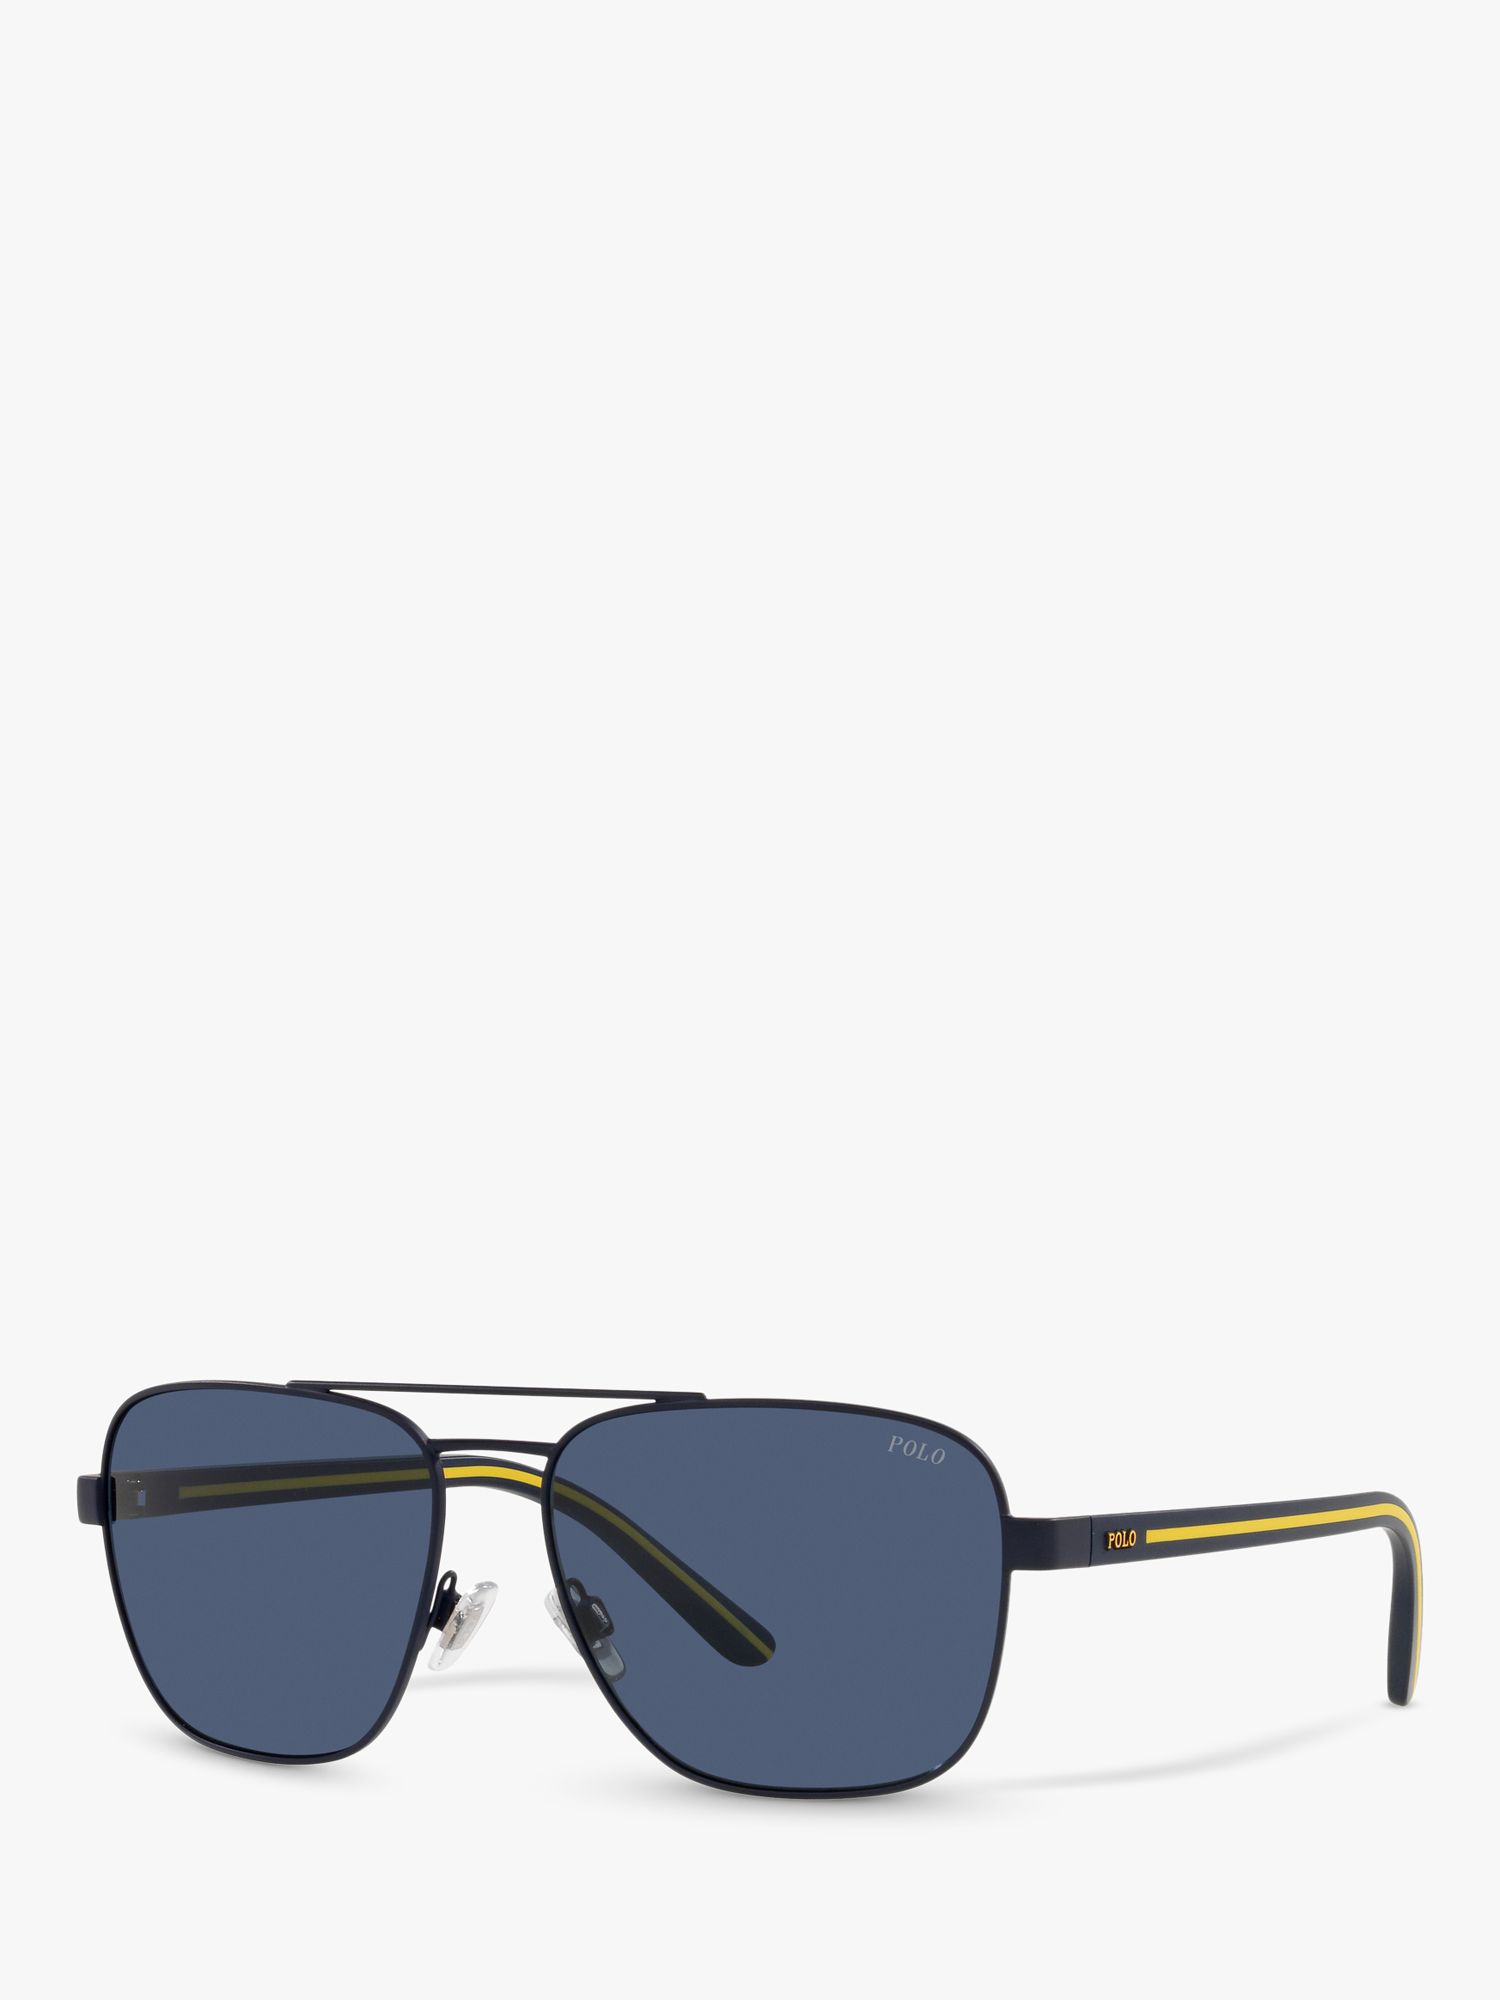 Polo Ralph Lauren PH3138 Men's Pilot Sunglasses, Navy Blue/Blue at John ...